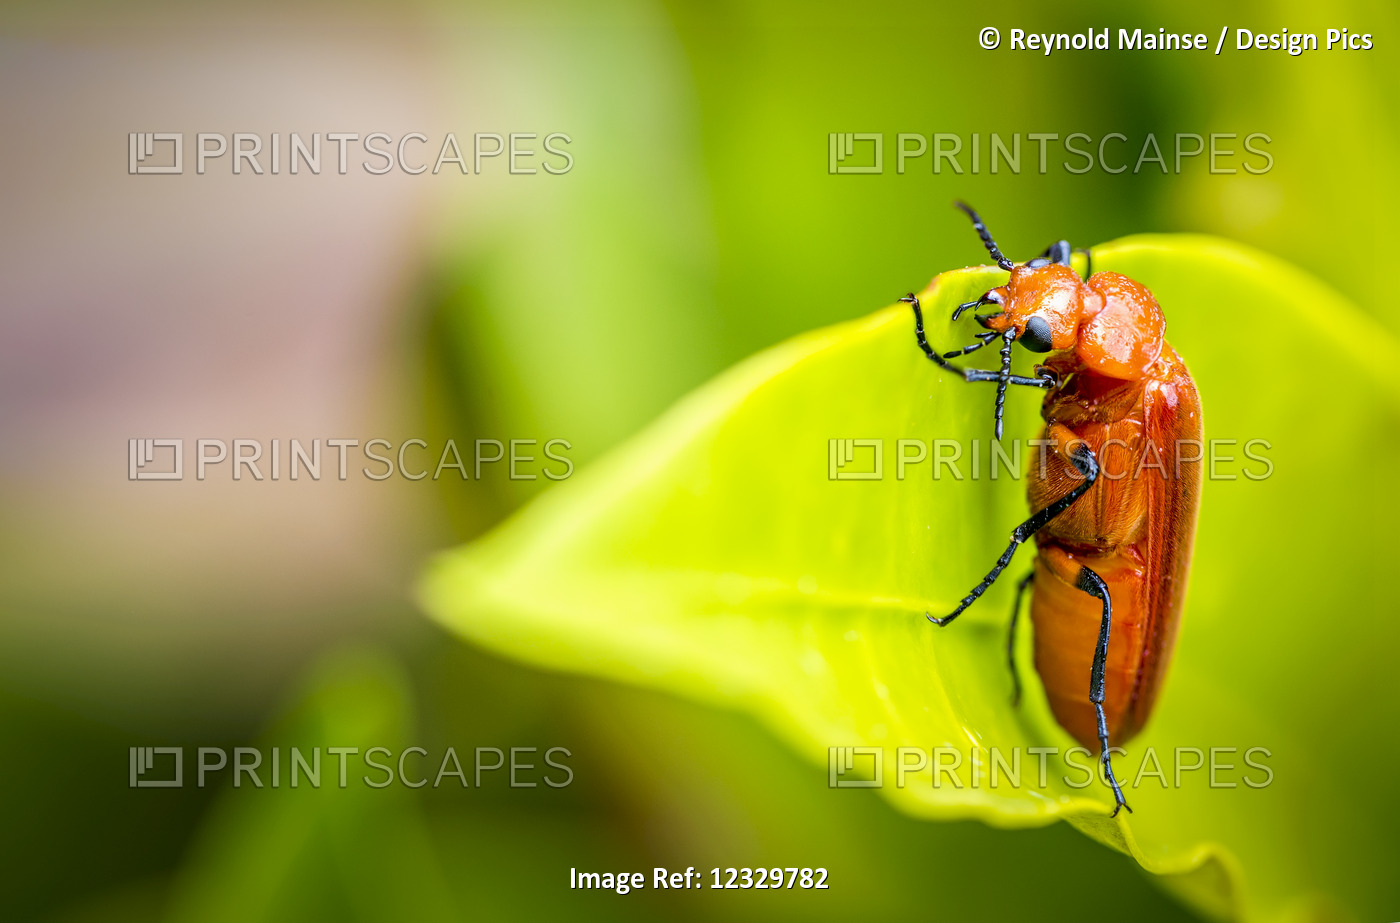 Orange Beetle On A Leaf; Gulu, Uganda